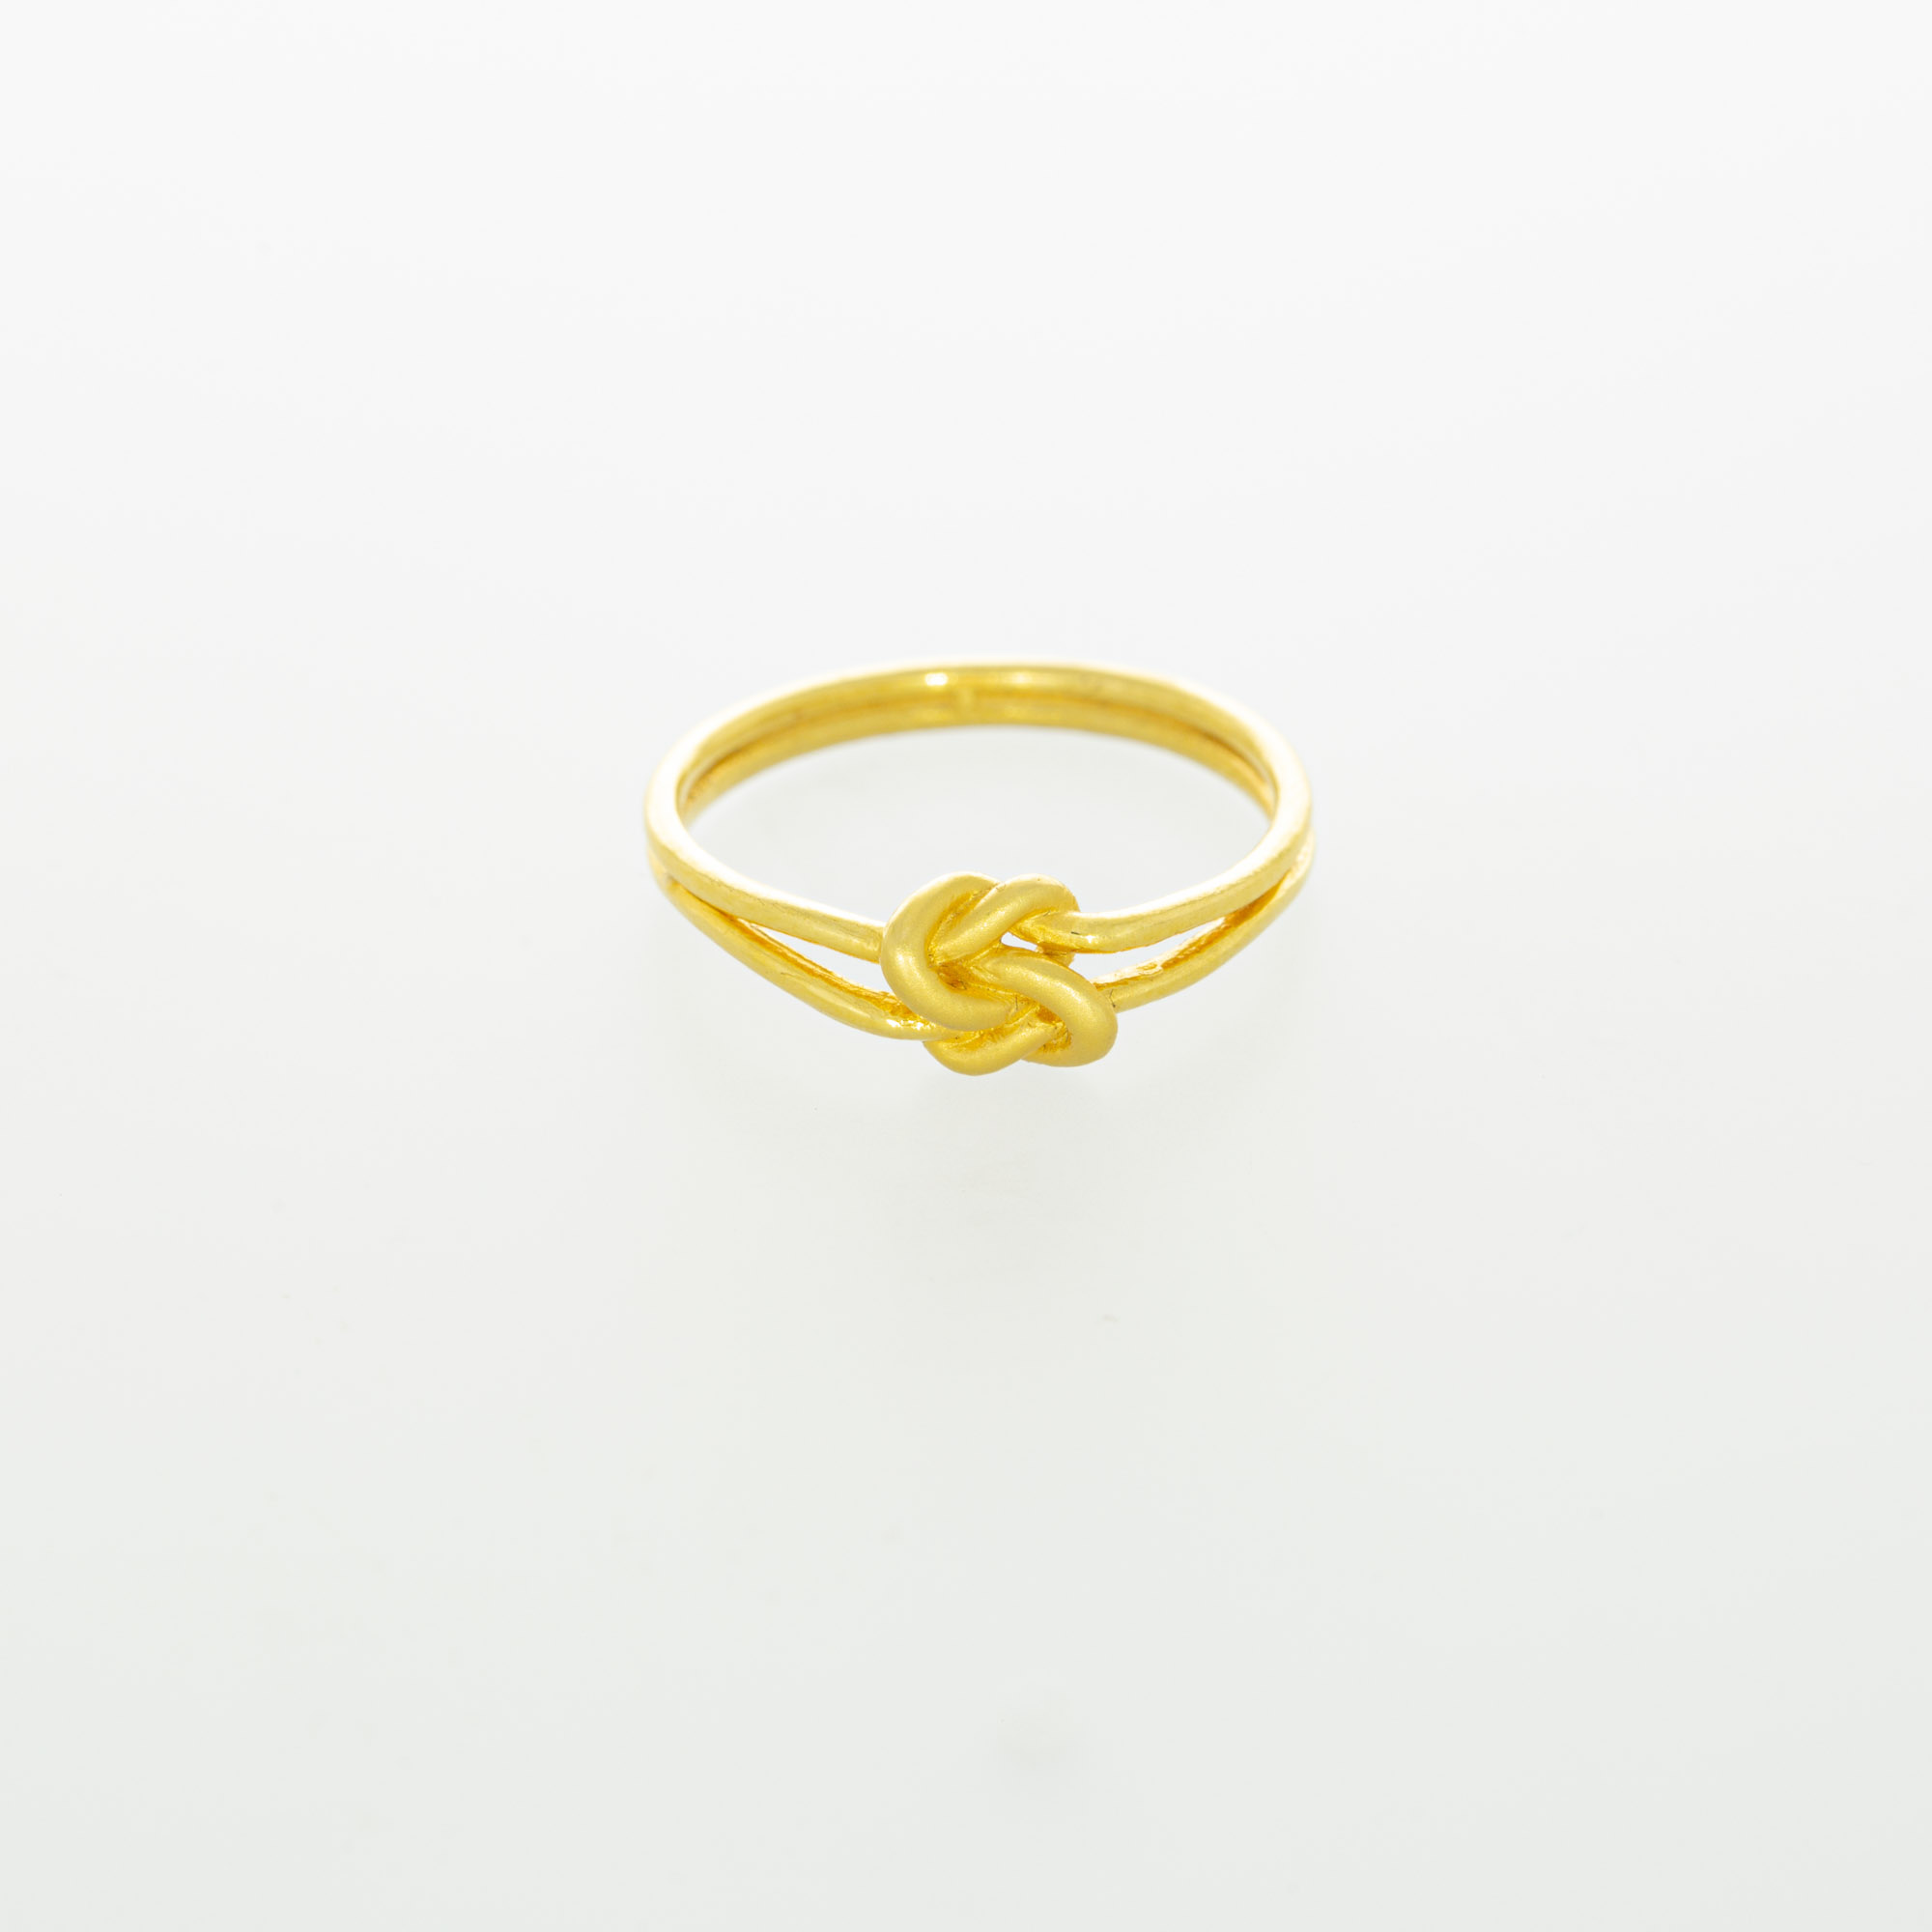 18K Gold 'Solitaire' Diamond Ring for Women - 235-DR101 in 2.550 Grams